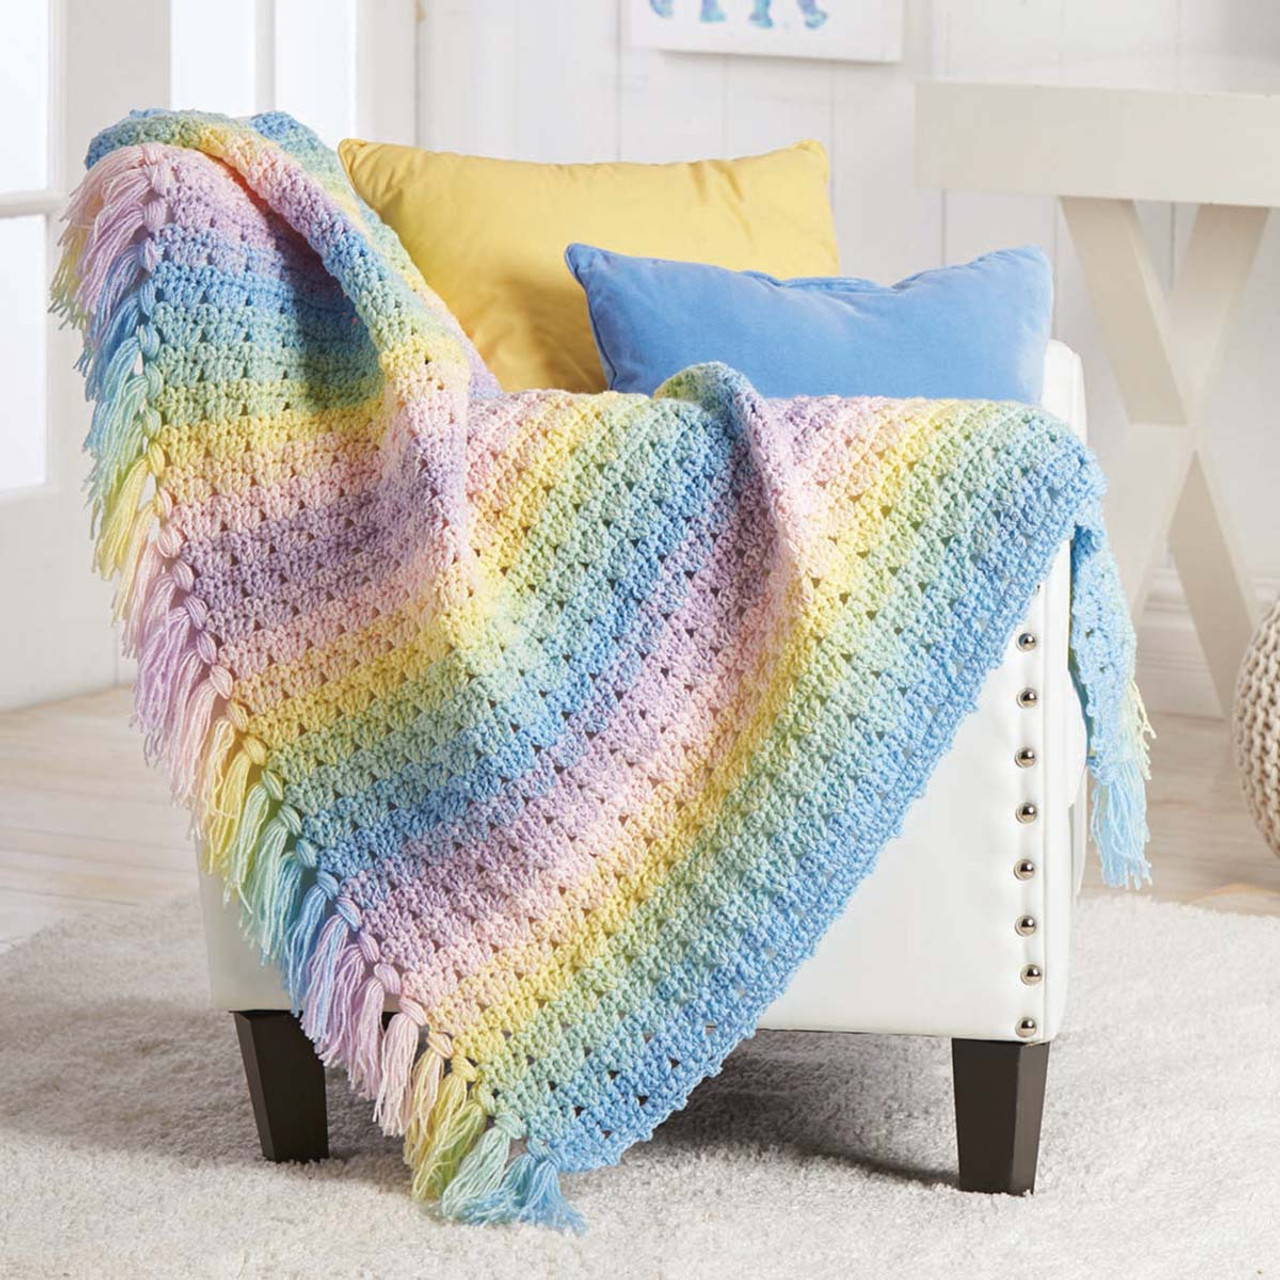 Herrschners Rainbow Baby Blanket Crochet Kit